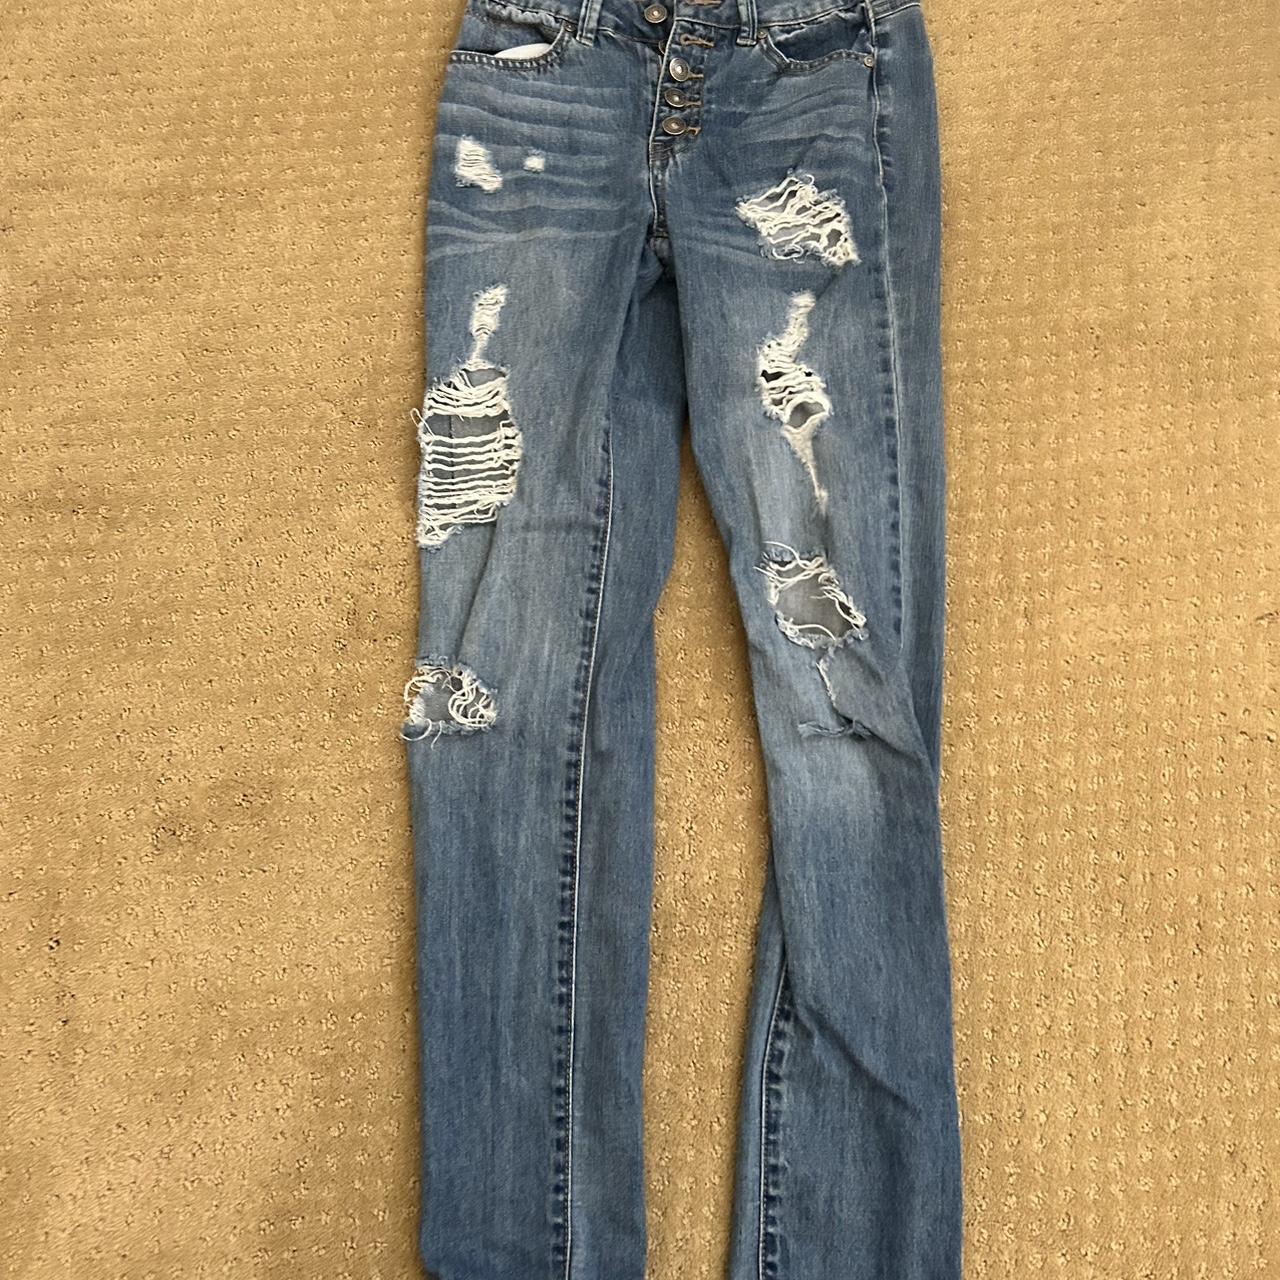 ripped jeans, brand : rewash size 0, waist:24 inches - Depop